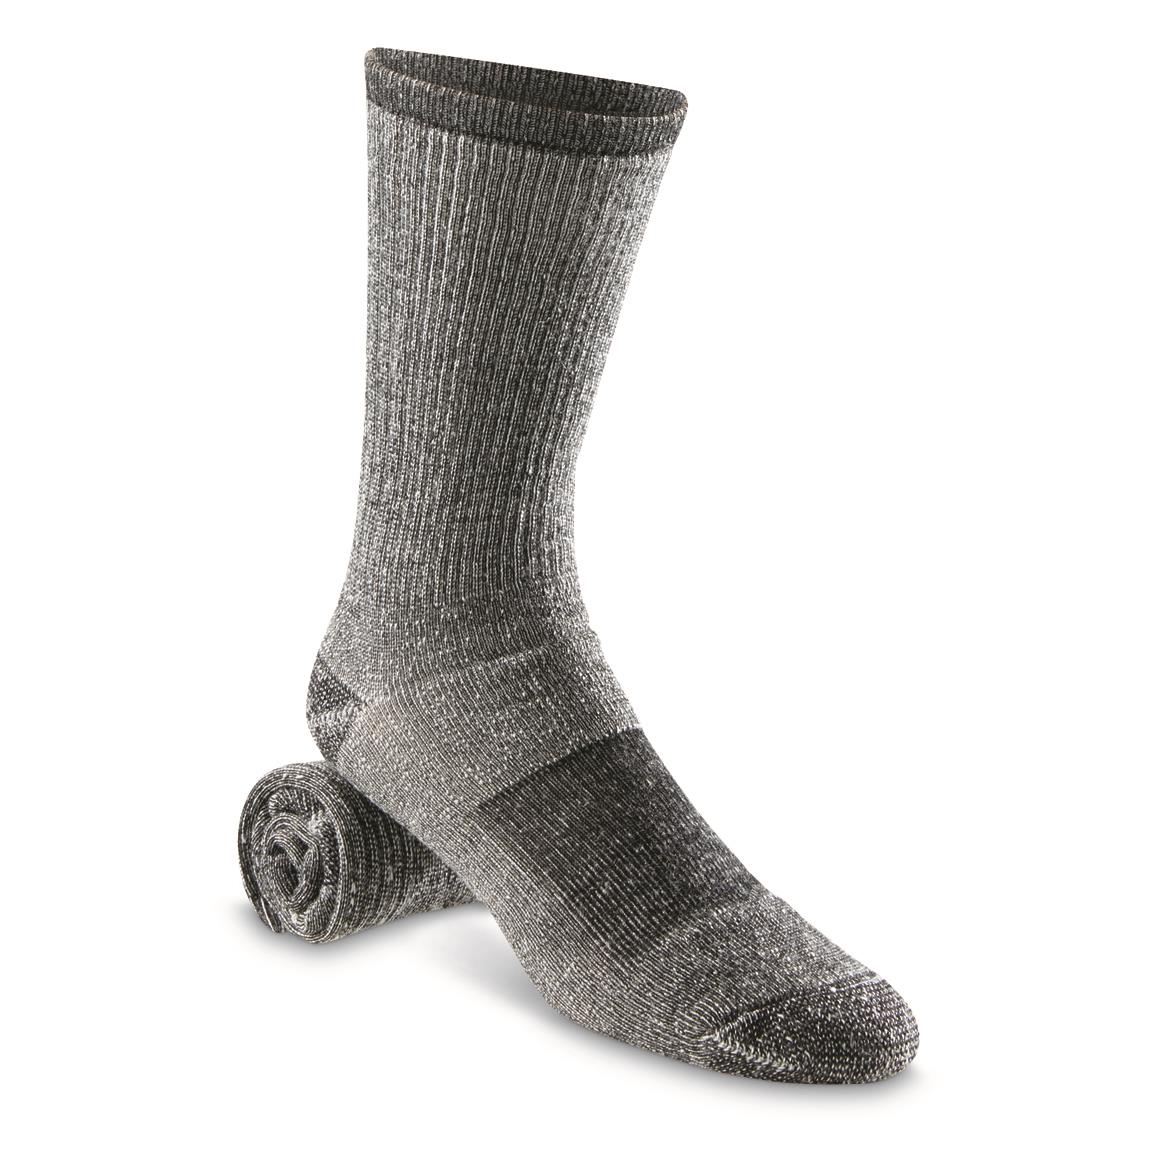 HuntRite Men's Merino Wool Blend Crew Socks, 6 Pairs, Black